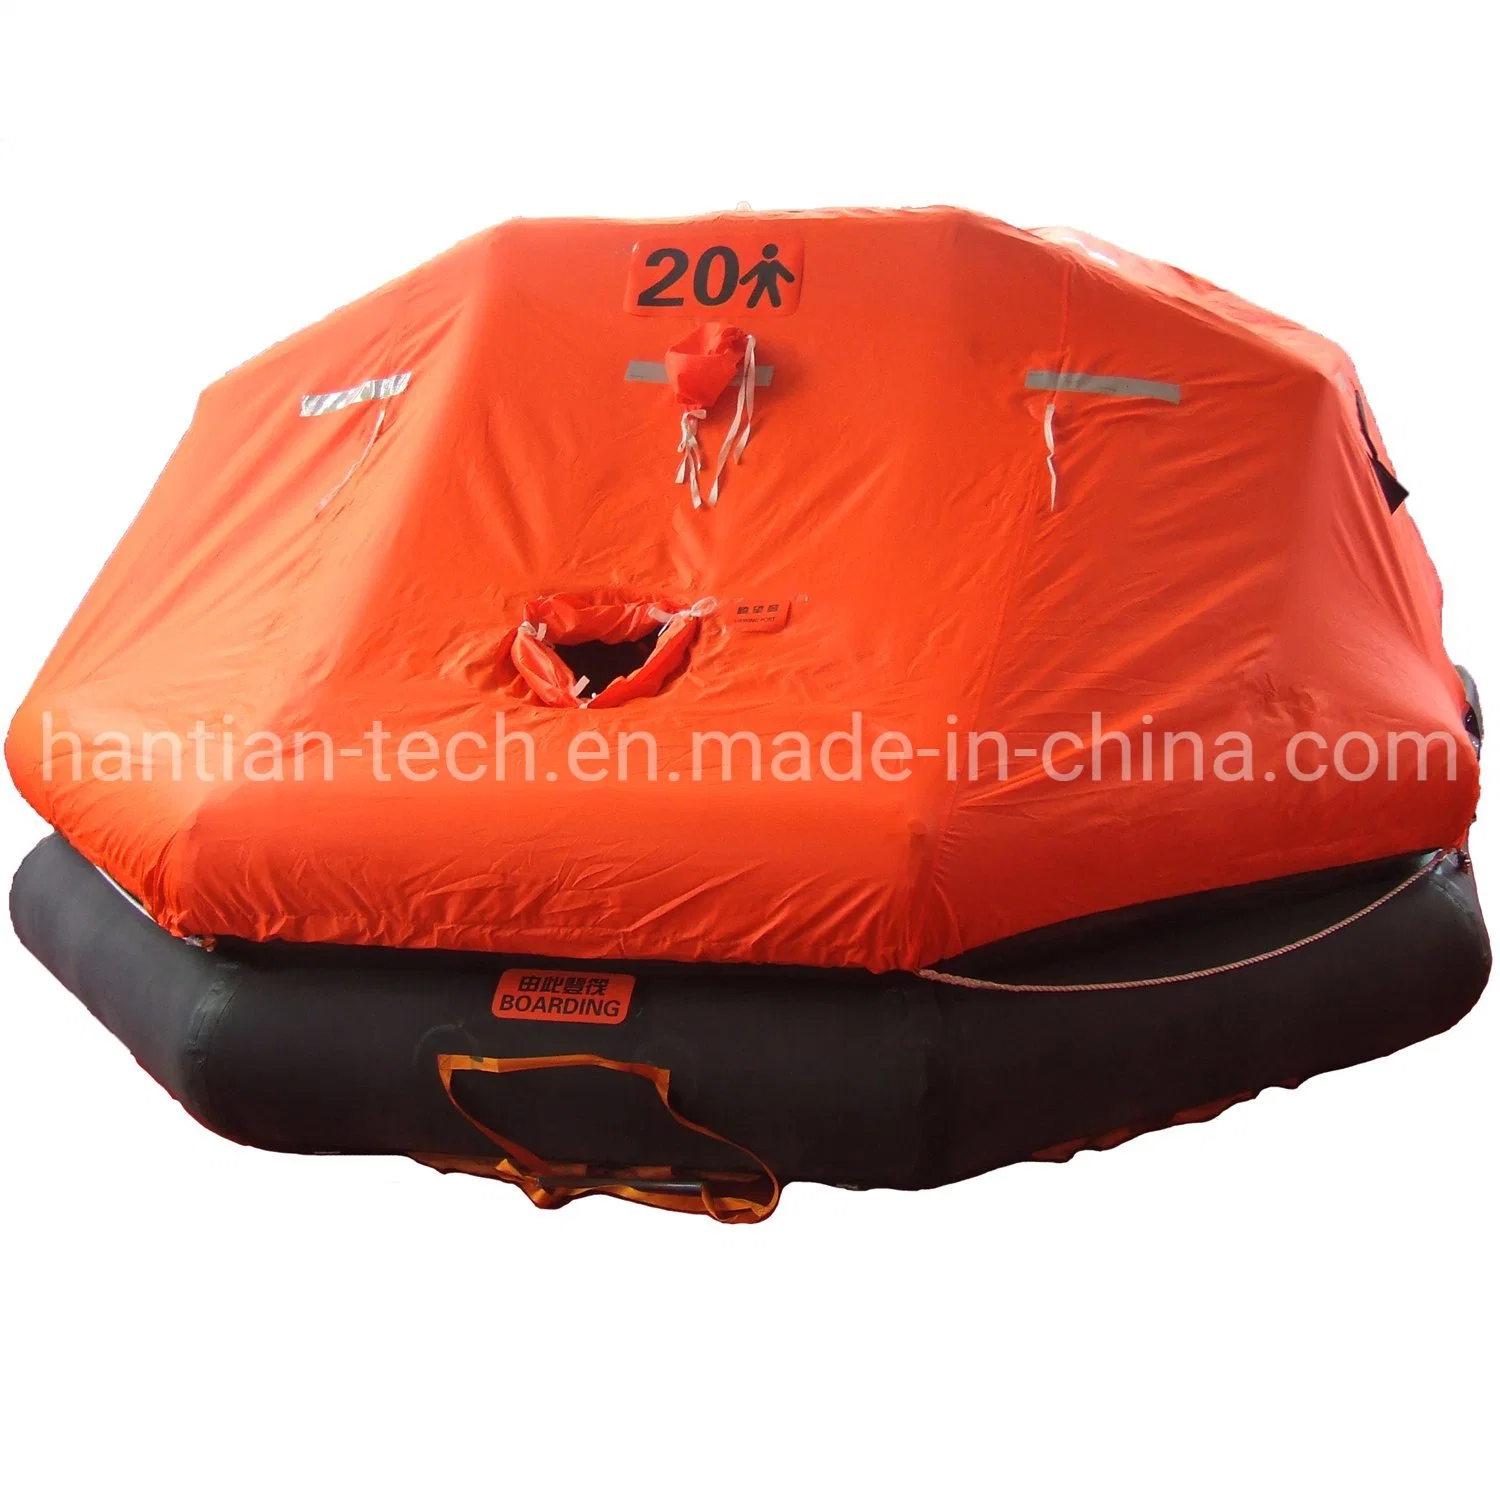 20person Solas Marine Equipment Inflatable Lifesaving Raft